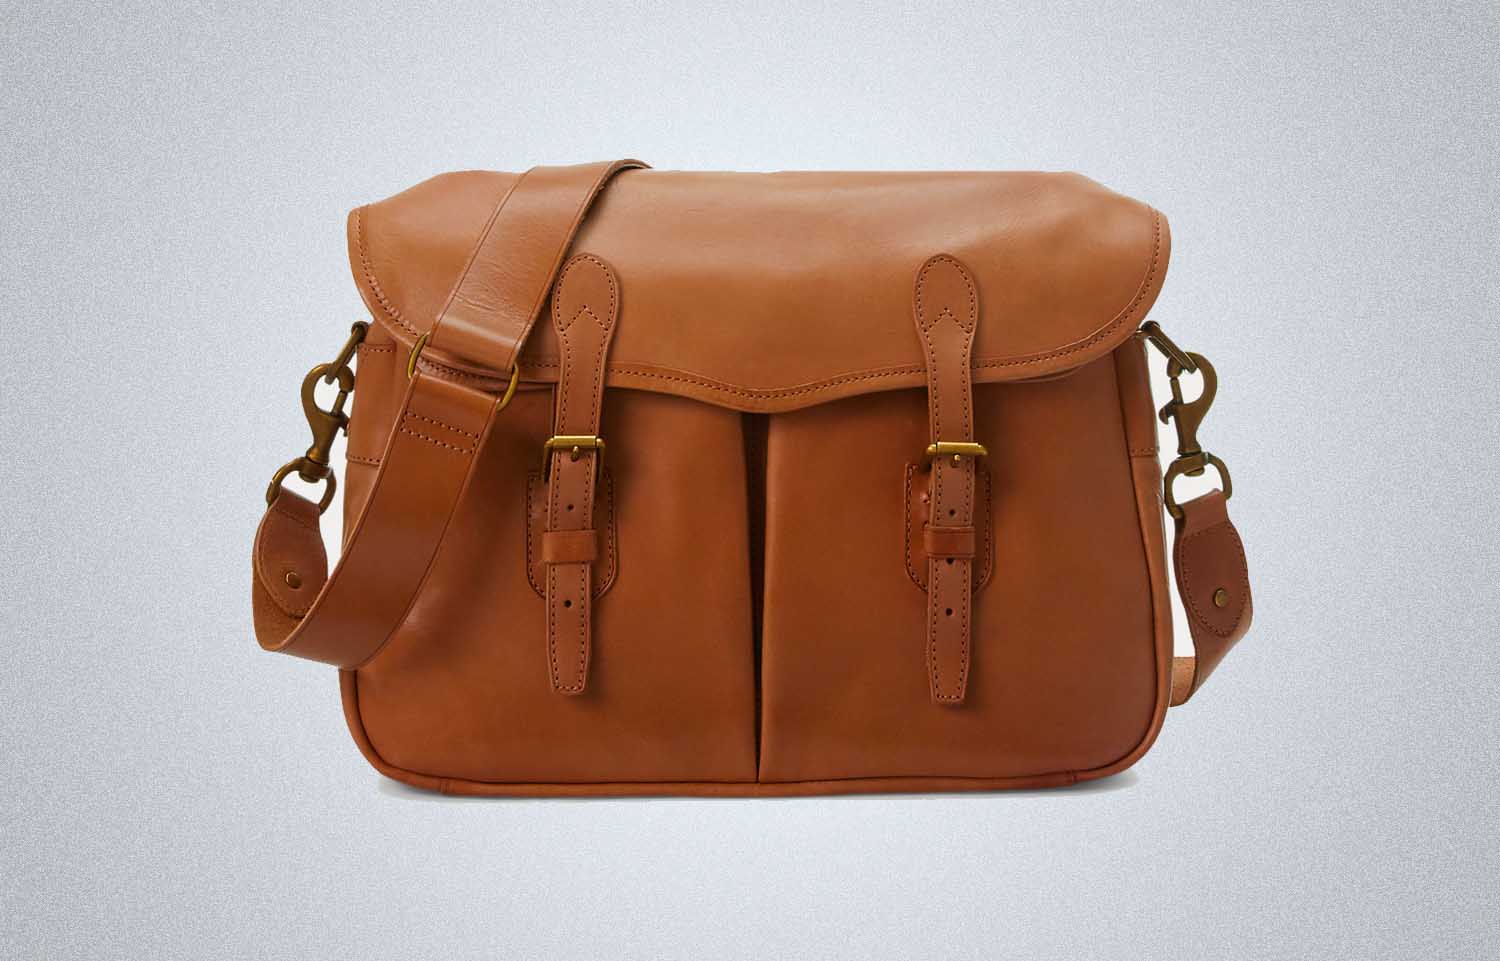 Polo Ralph Lauren Heritage Leather Messenger Bag